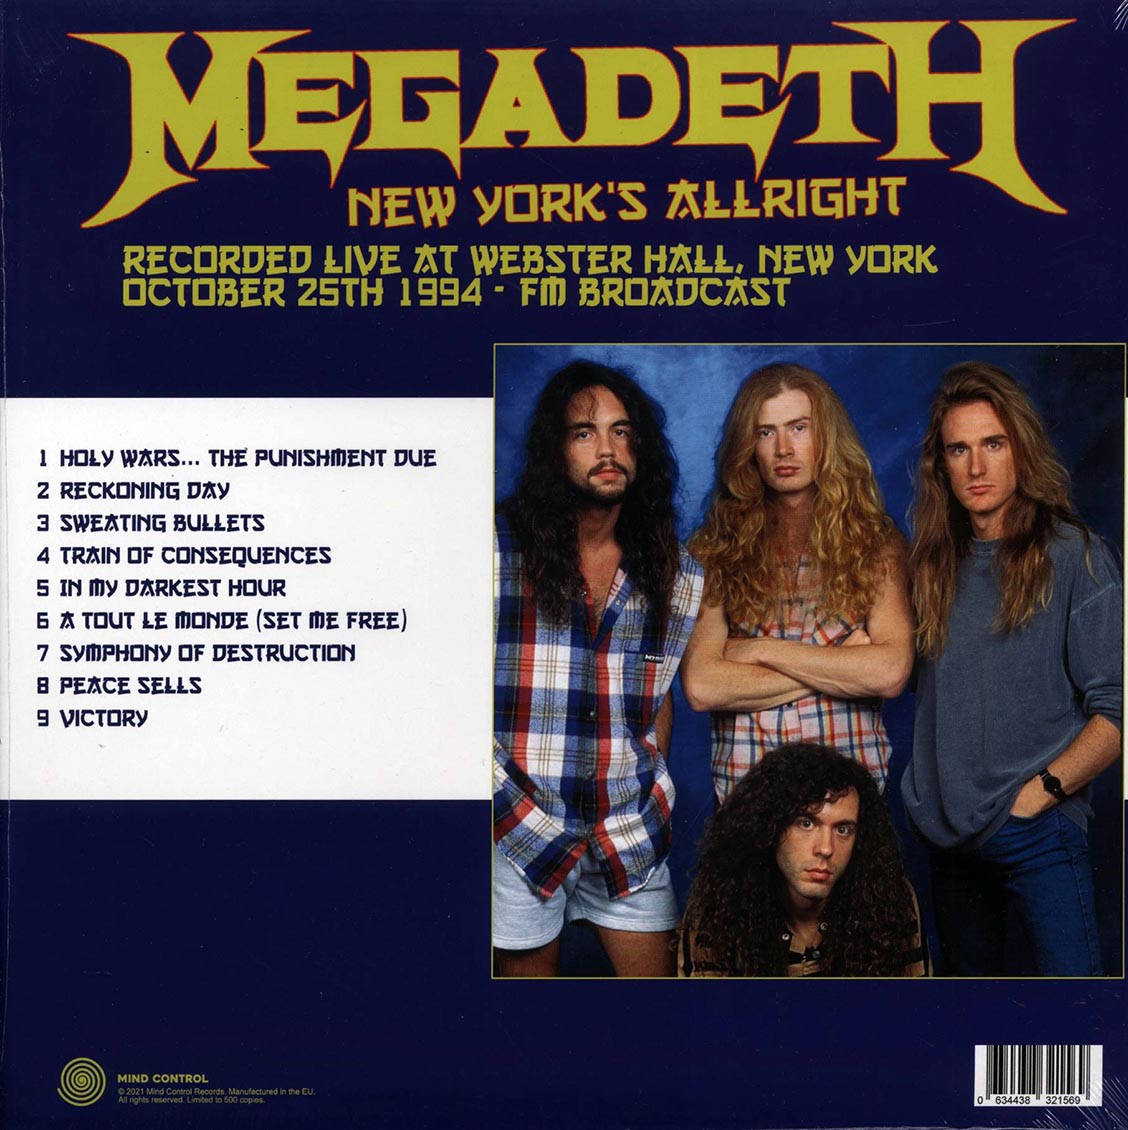 Megadeth - New York's Alright: Recorded Live At Webster Hall, New York, October 25th 1994 FM Broadcast (ltd. 500 copies made) - Vinyl LP, LP